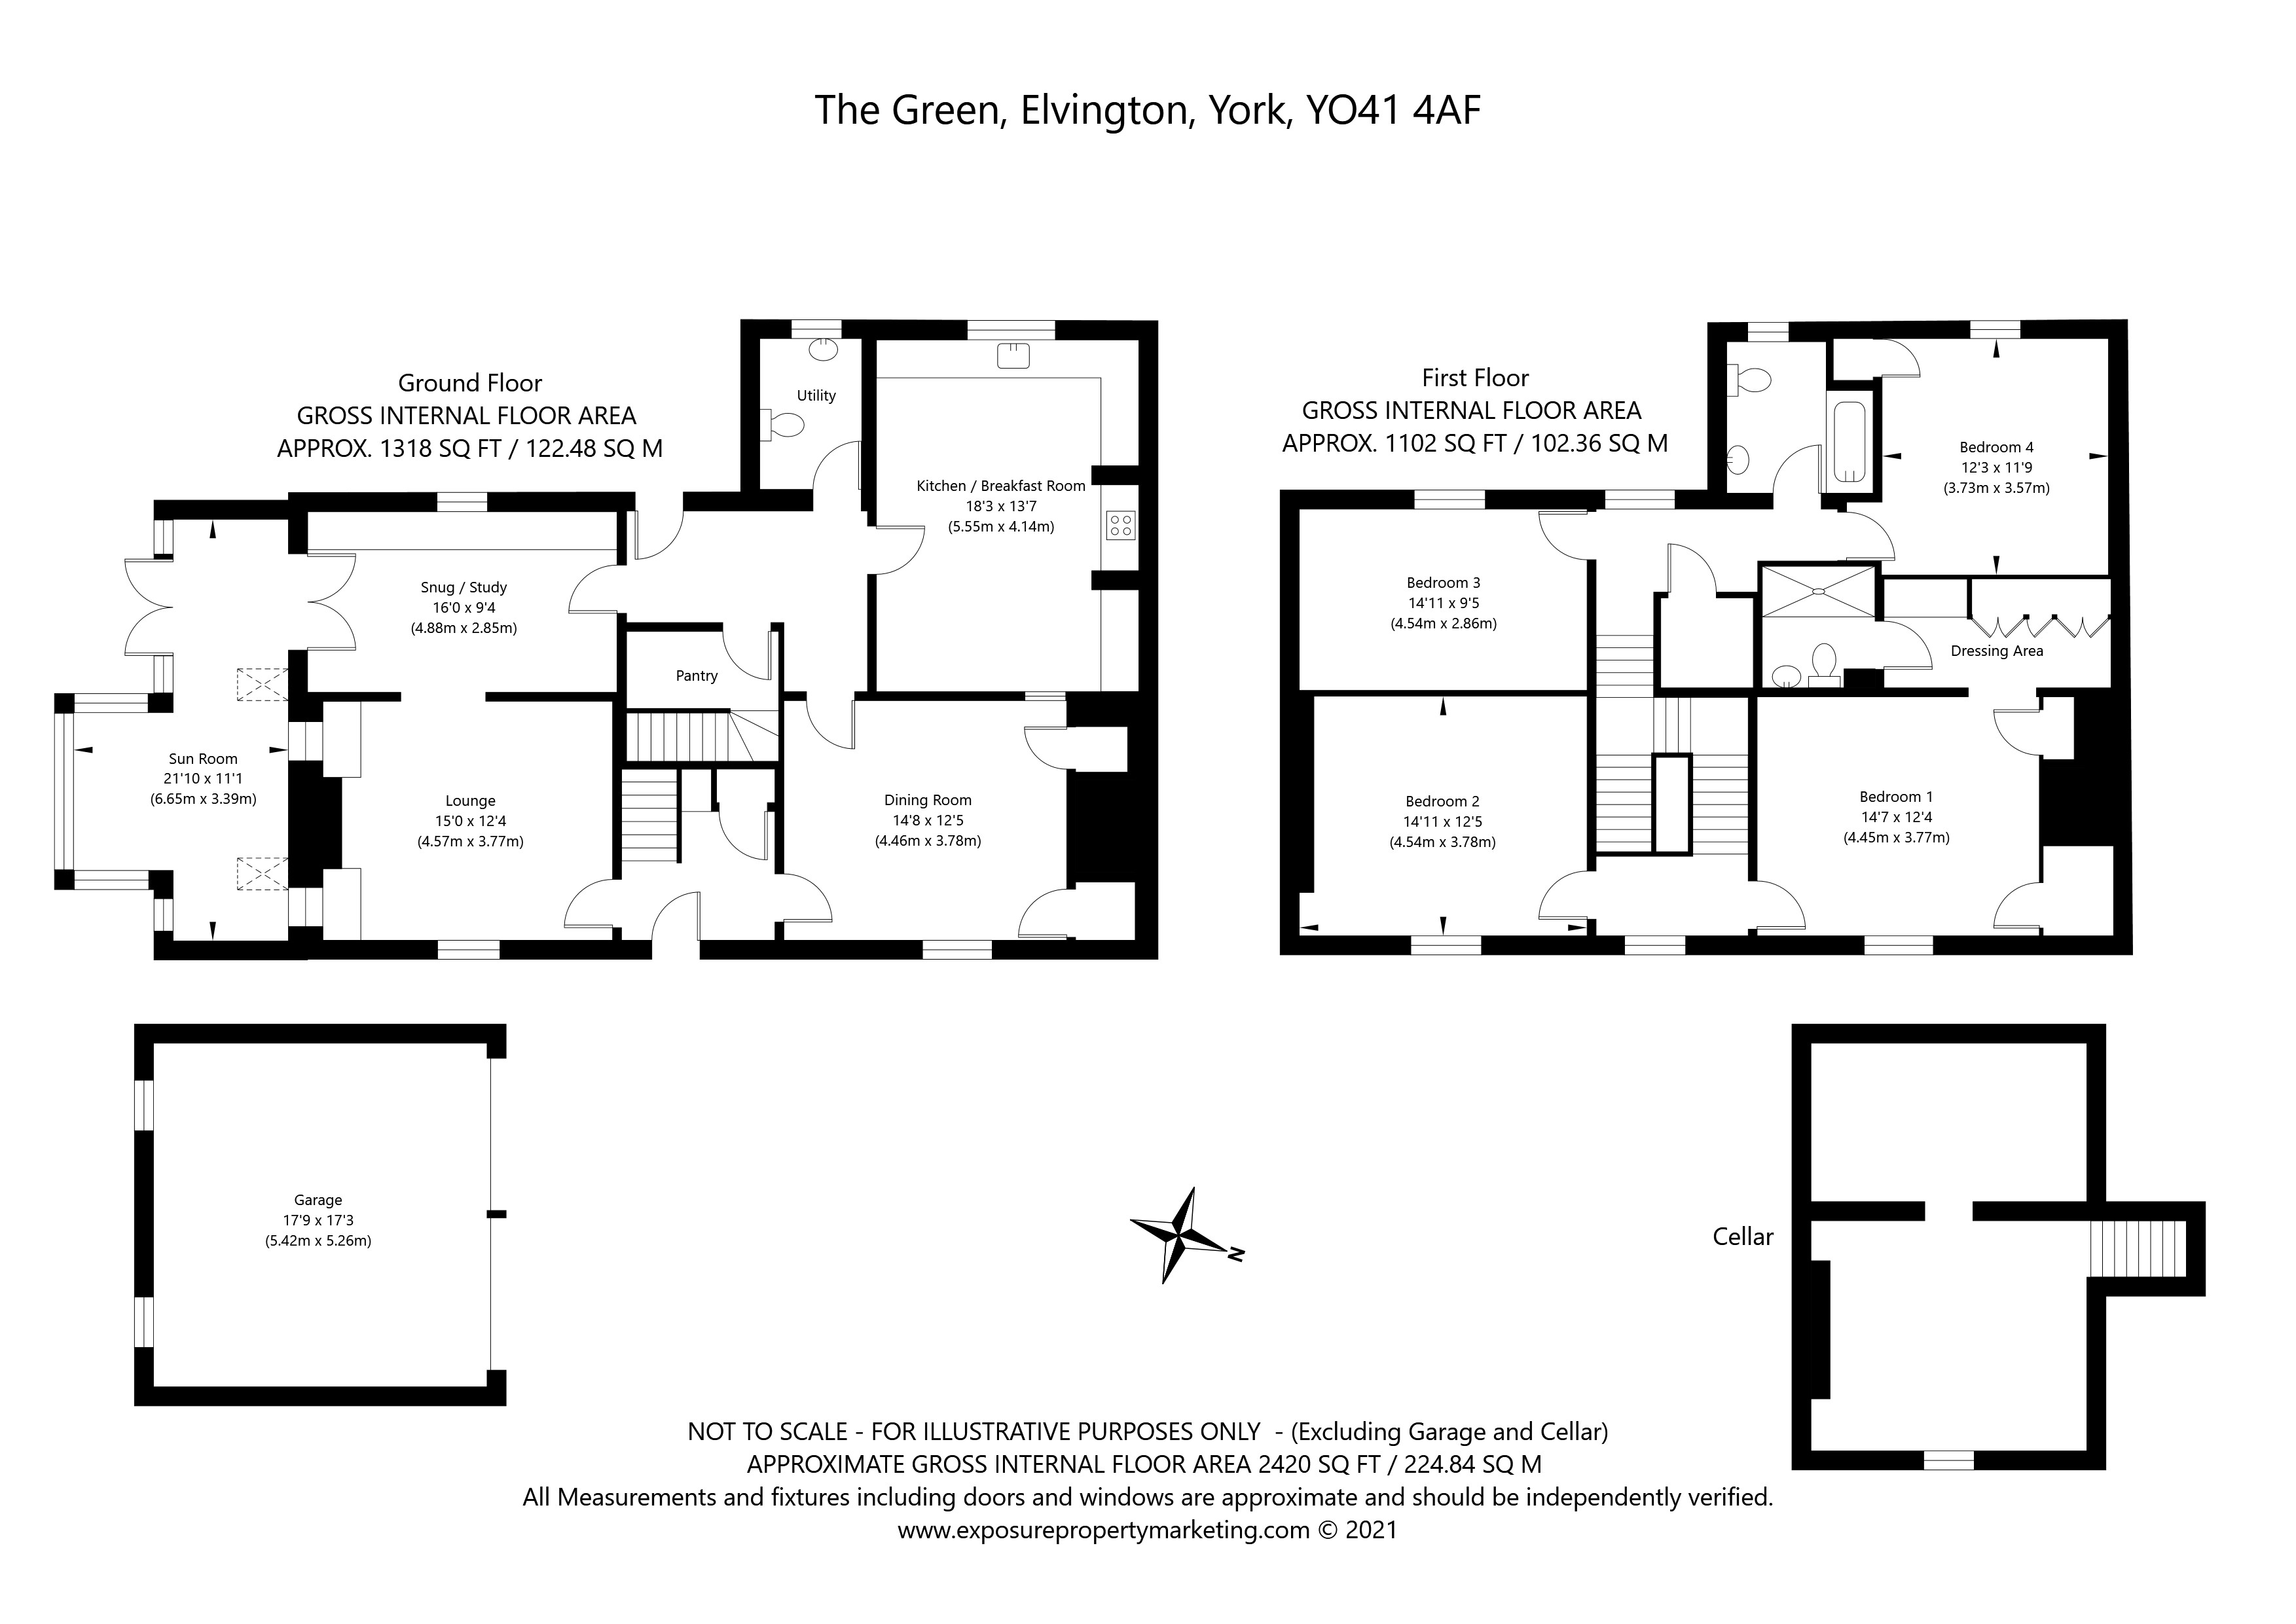 The Green, Elvington, York property floorplan